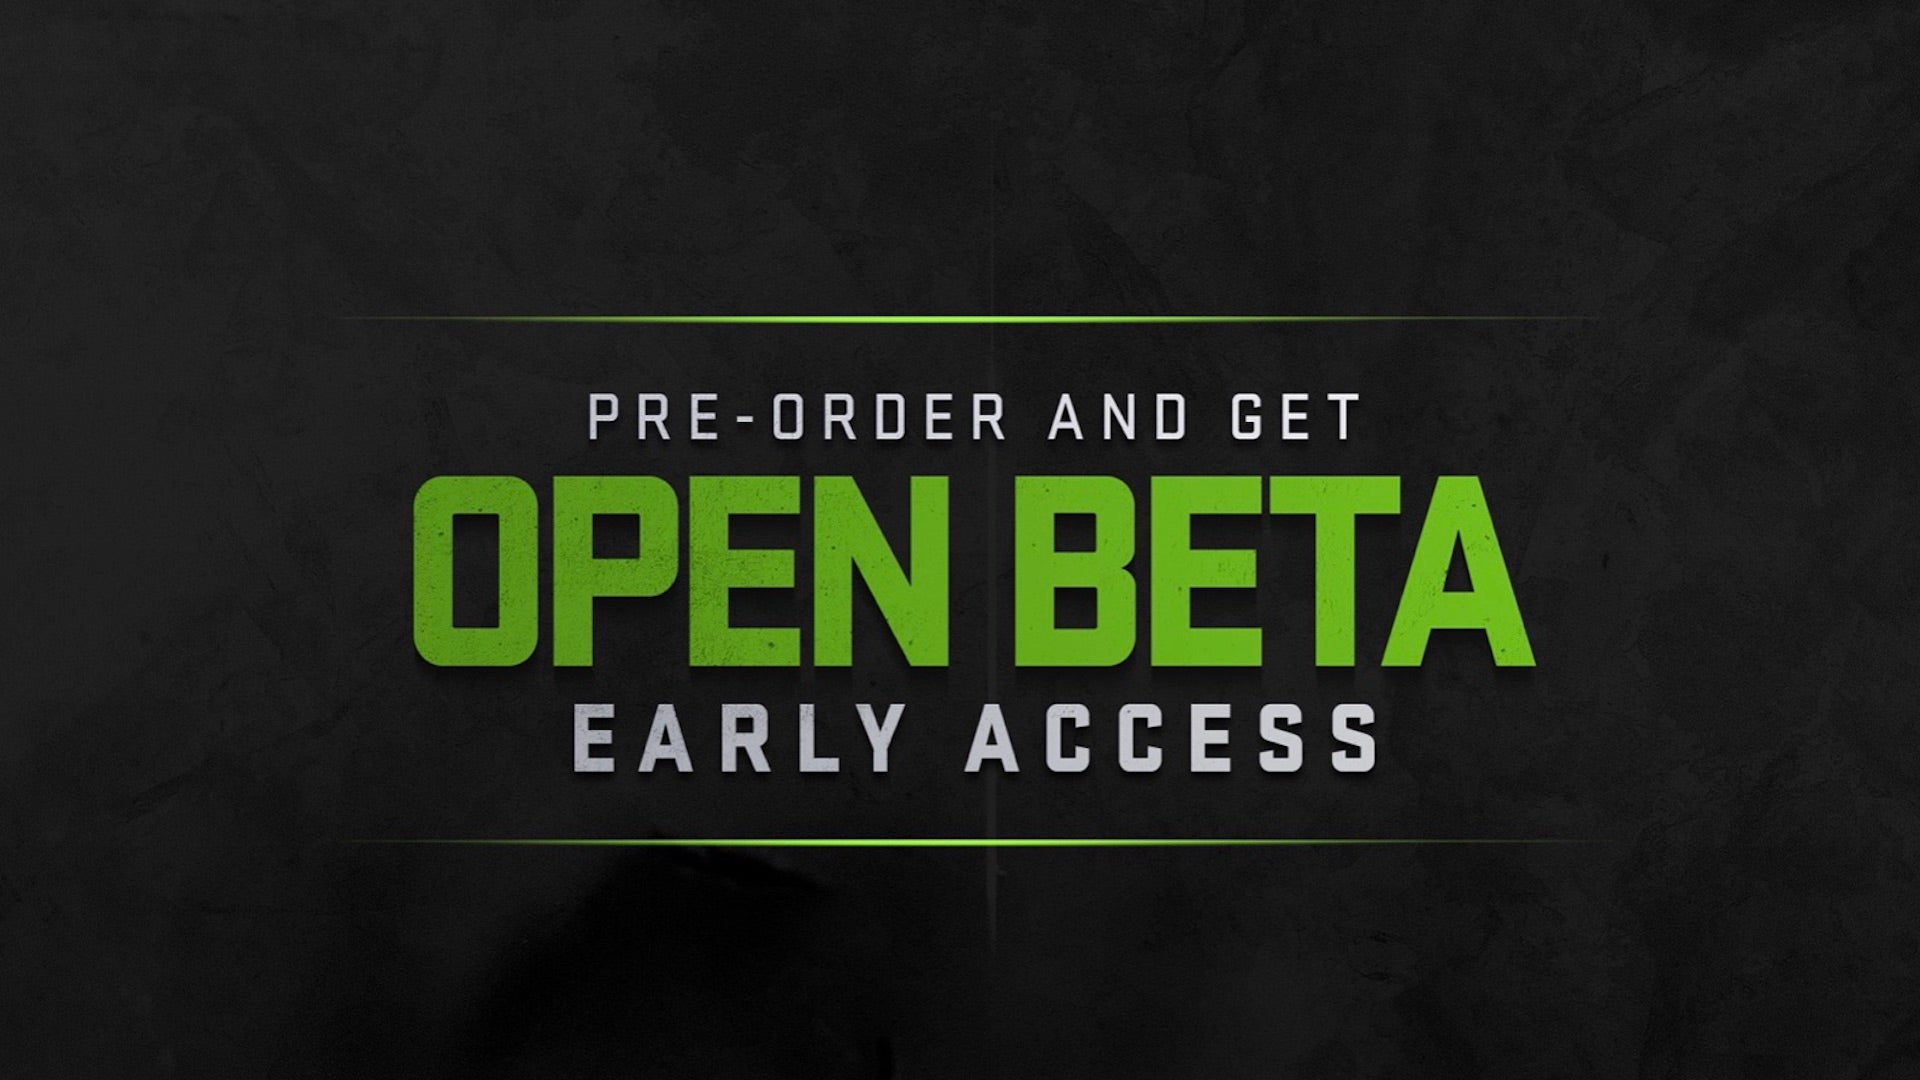 Open beta access for Modern Warfare 2